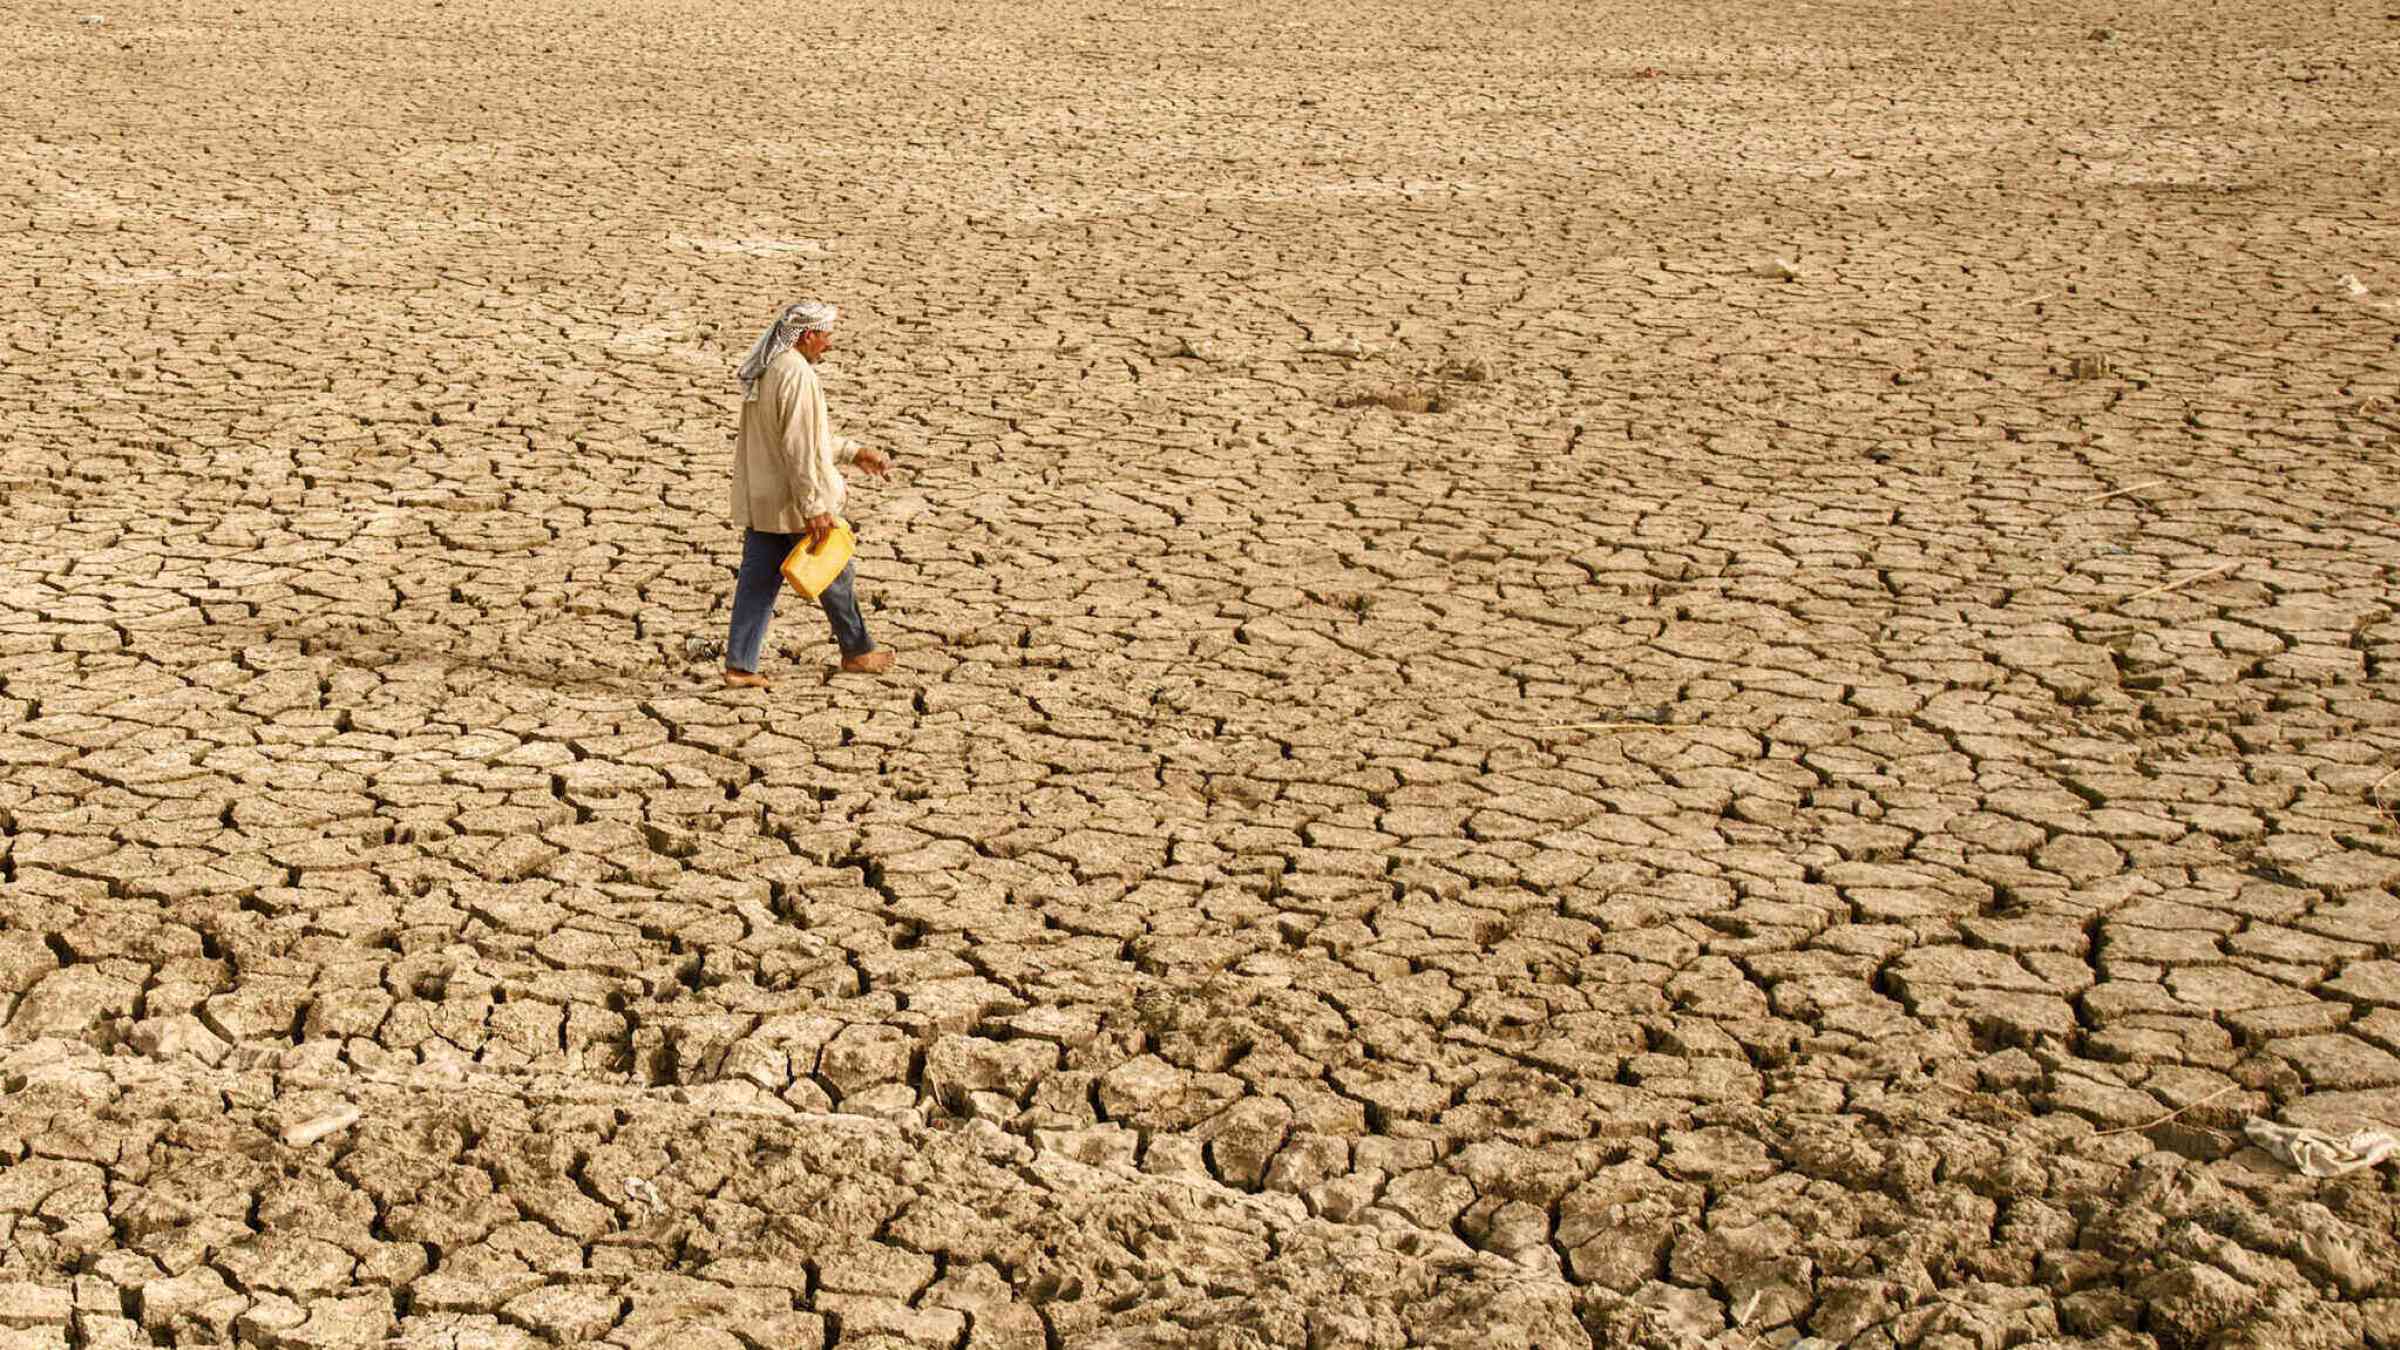 Iraq drought and desert